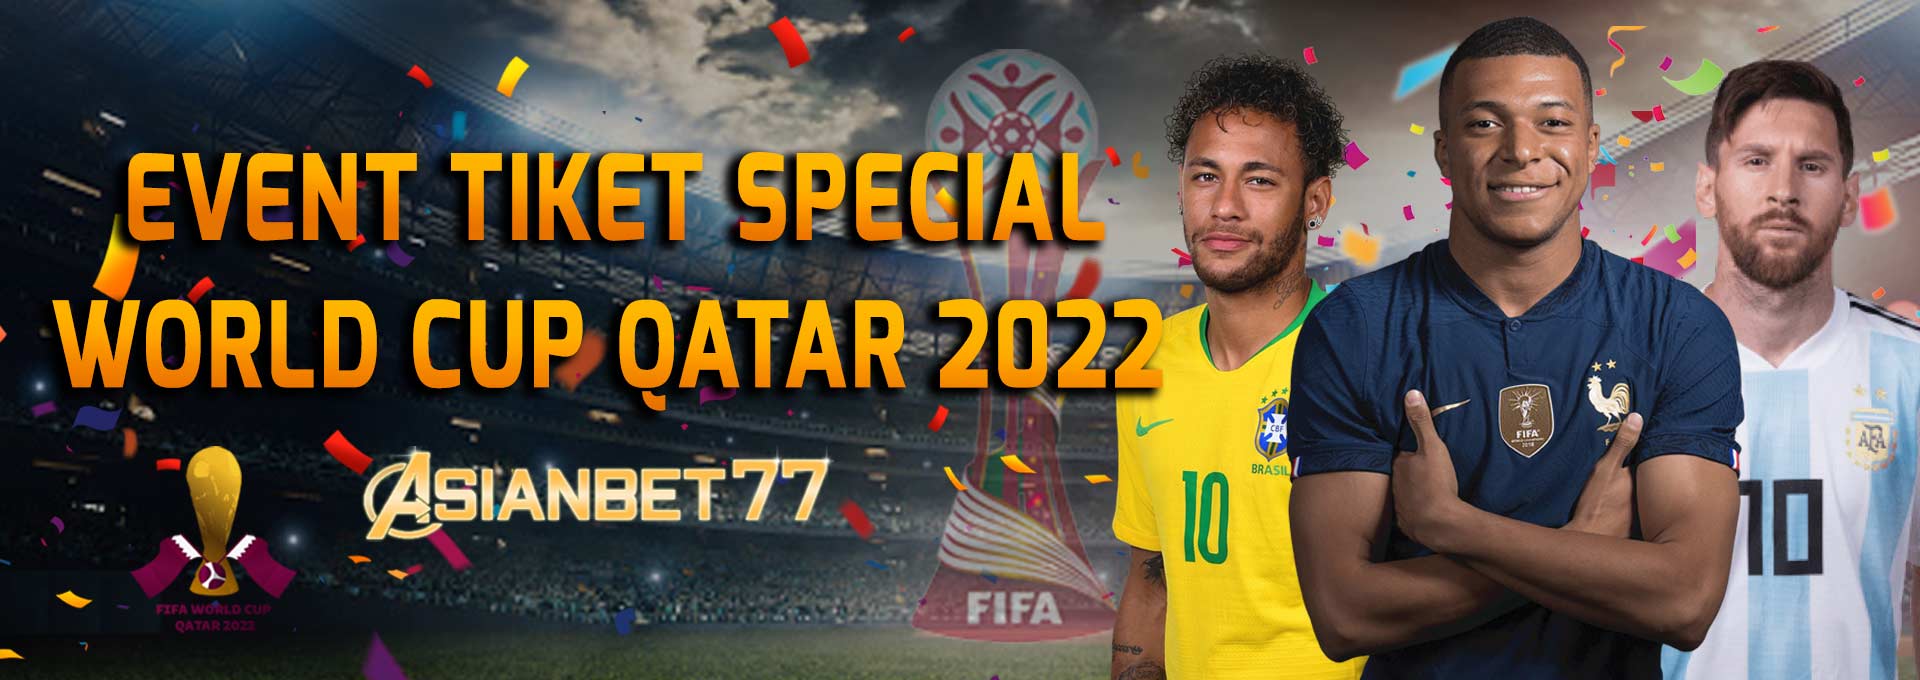 Event Tiket Special World Cup Qatar 2022 Asianbet77